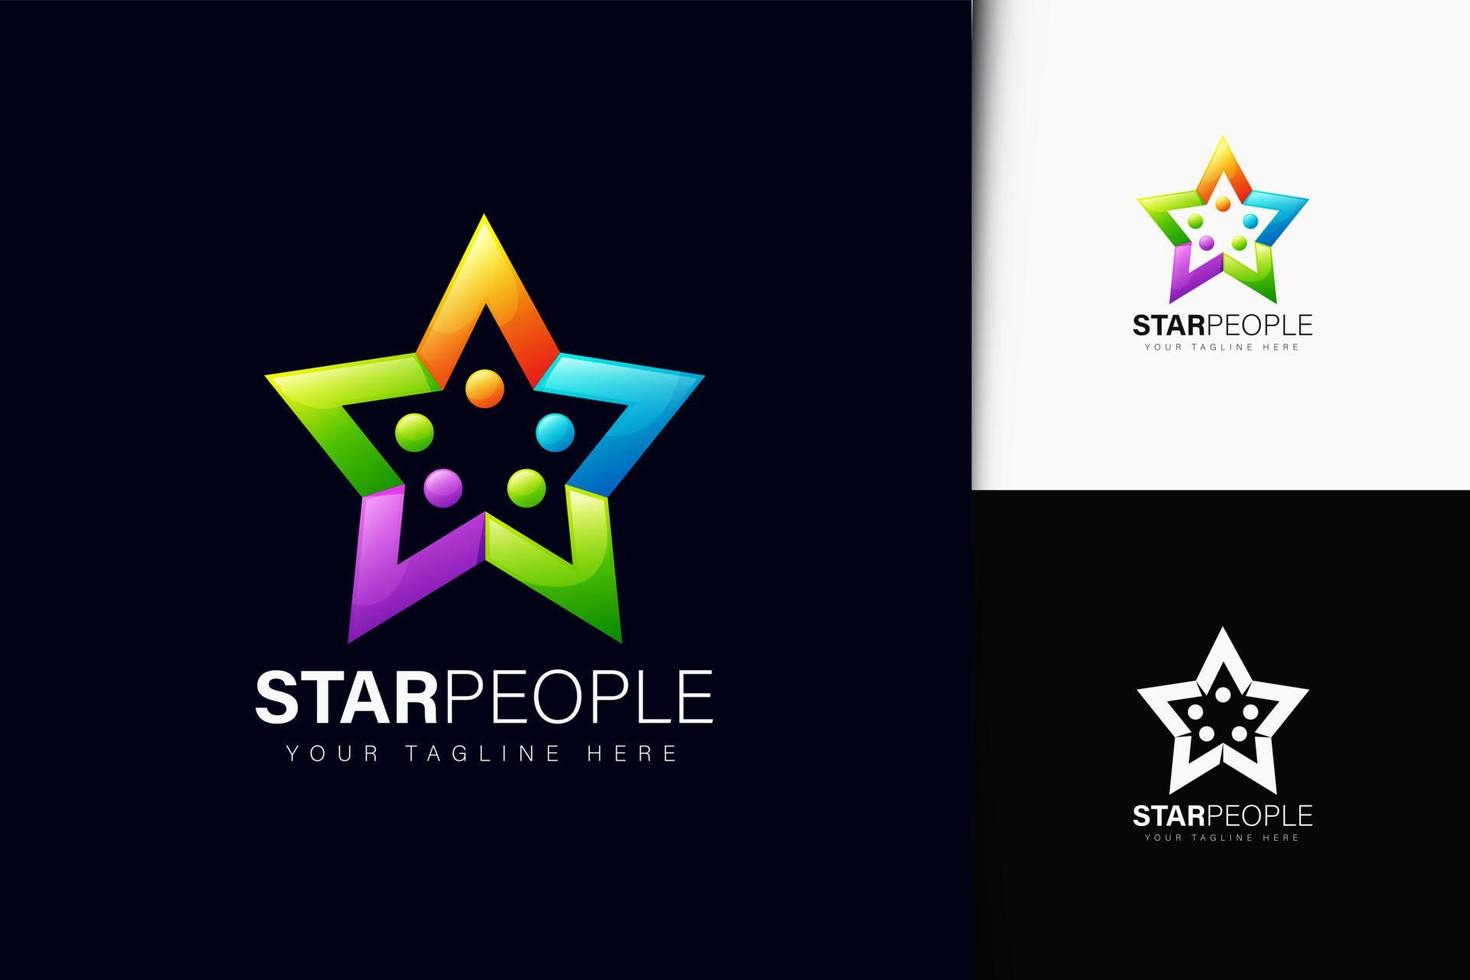 Star people logo design with gradient vector